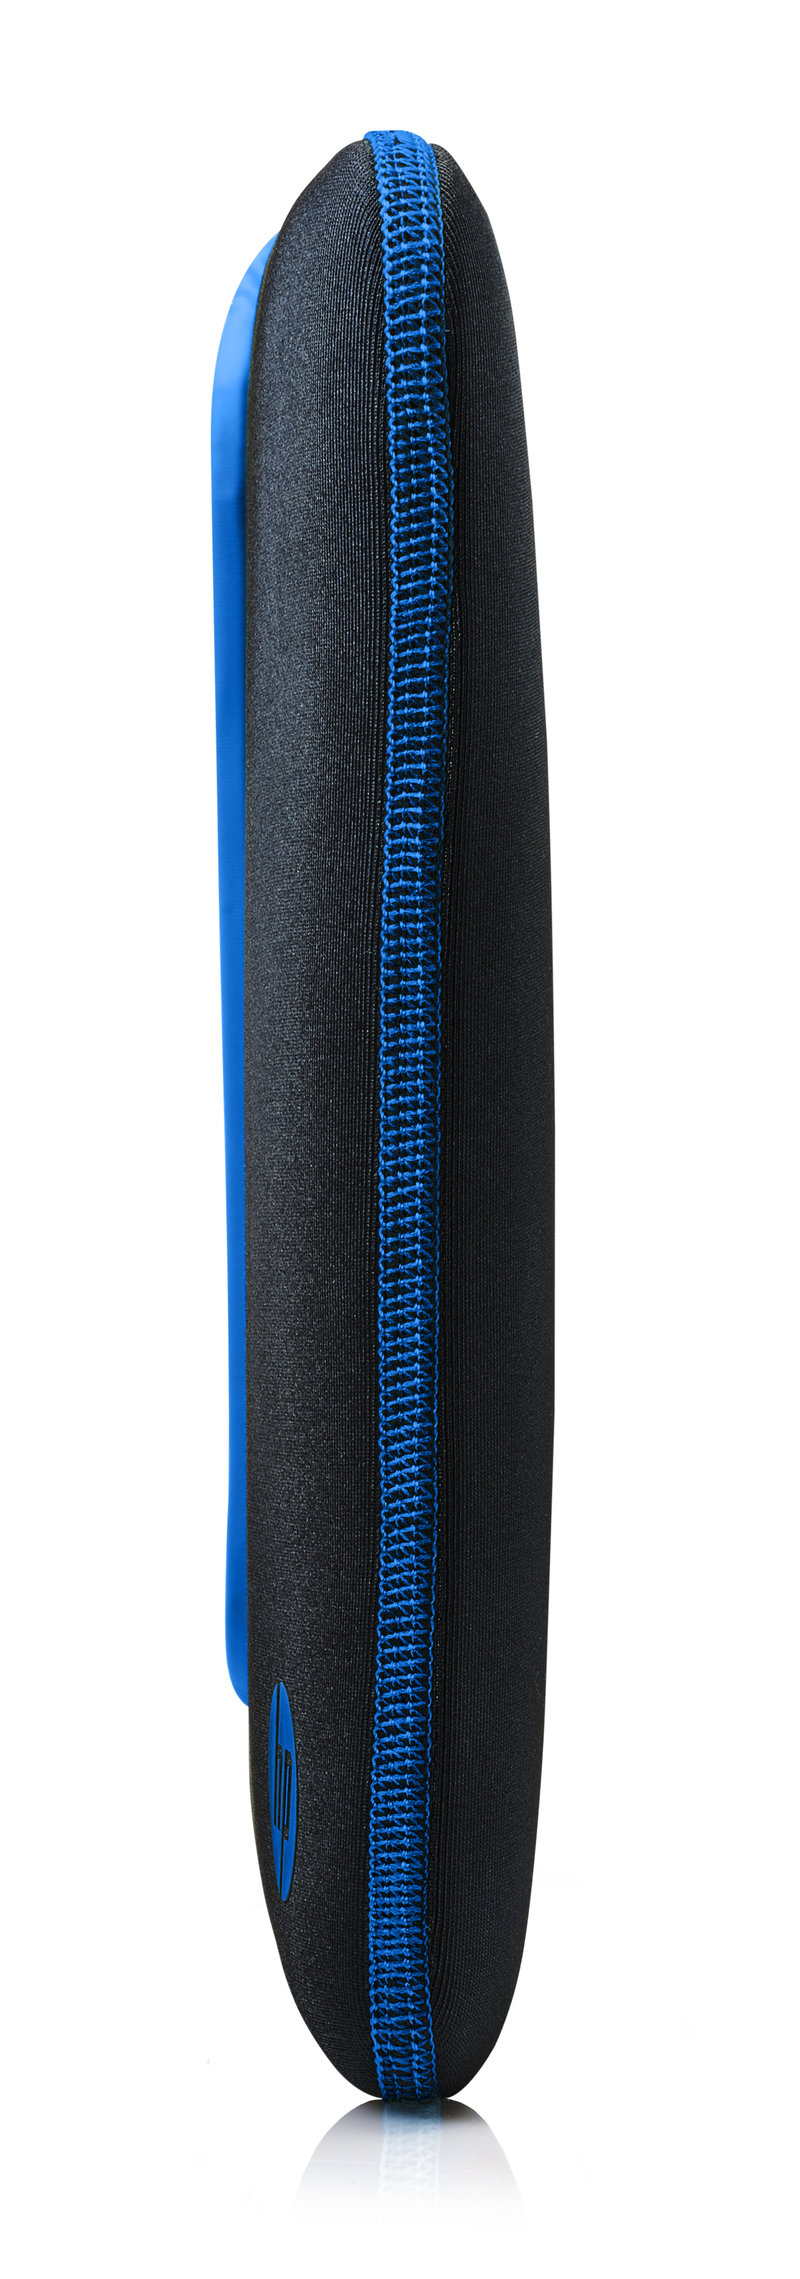 HP V5C27Aa Laptop Reversible Sleeve 14 Inch - Black & Blue